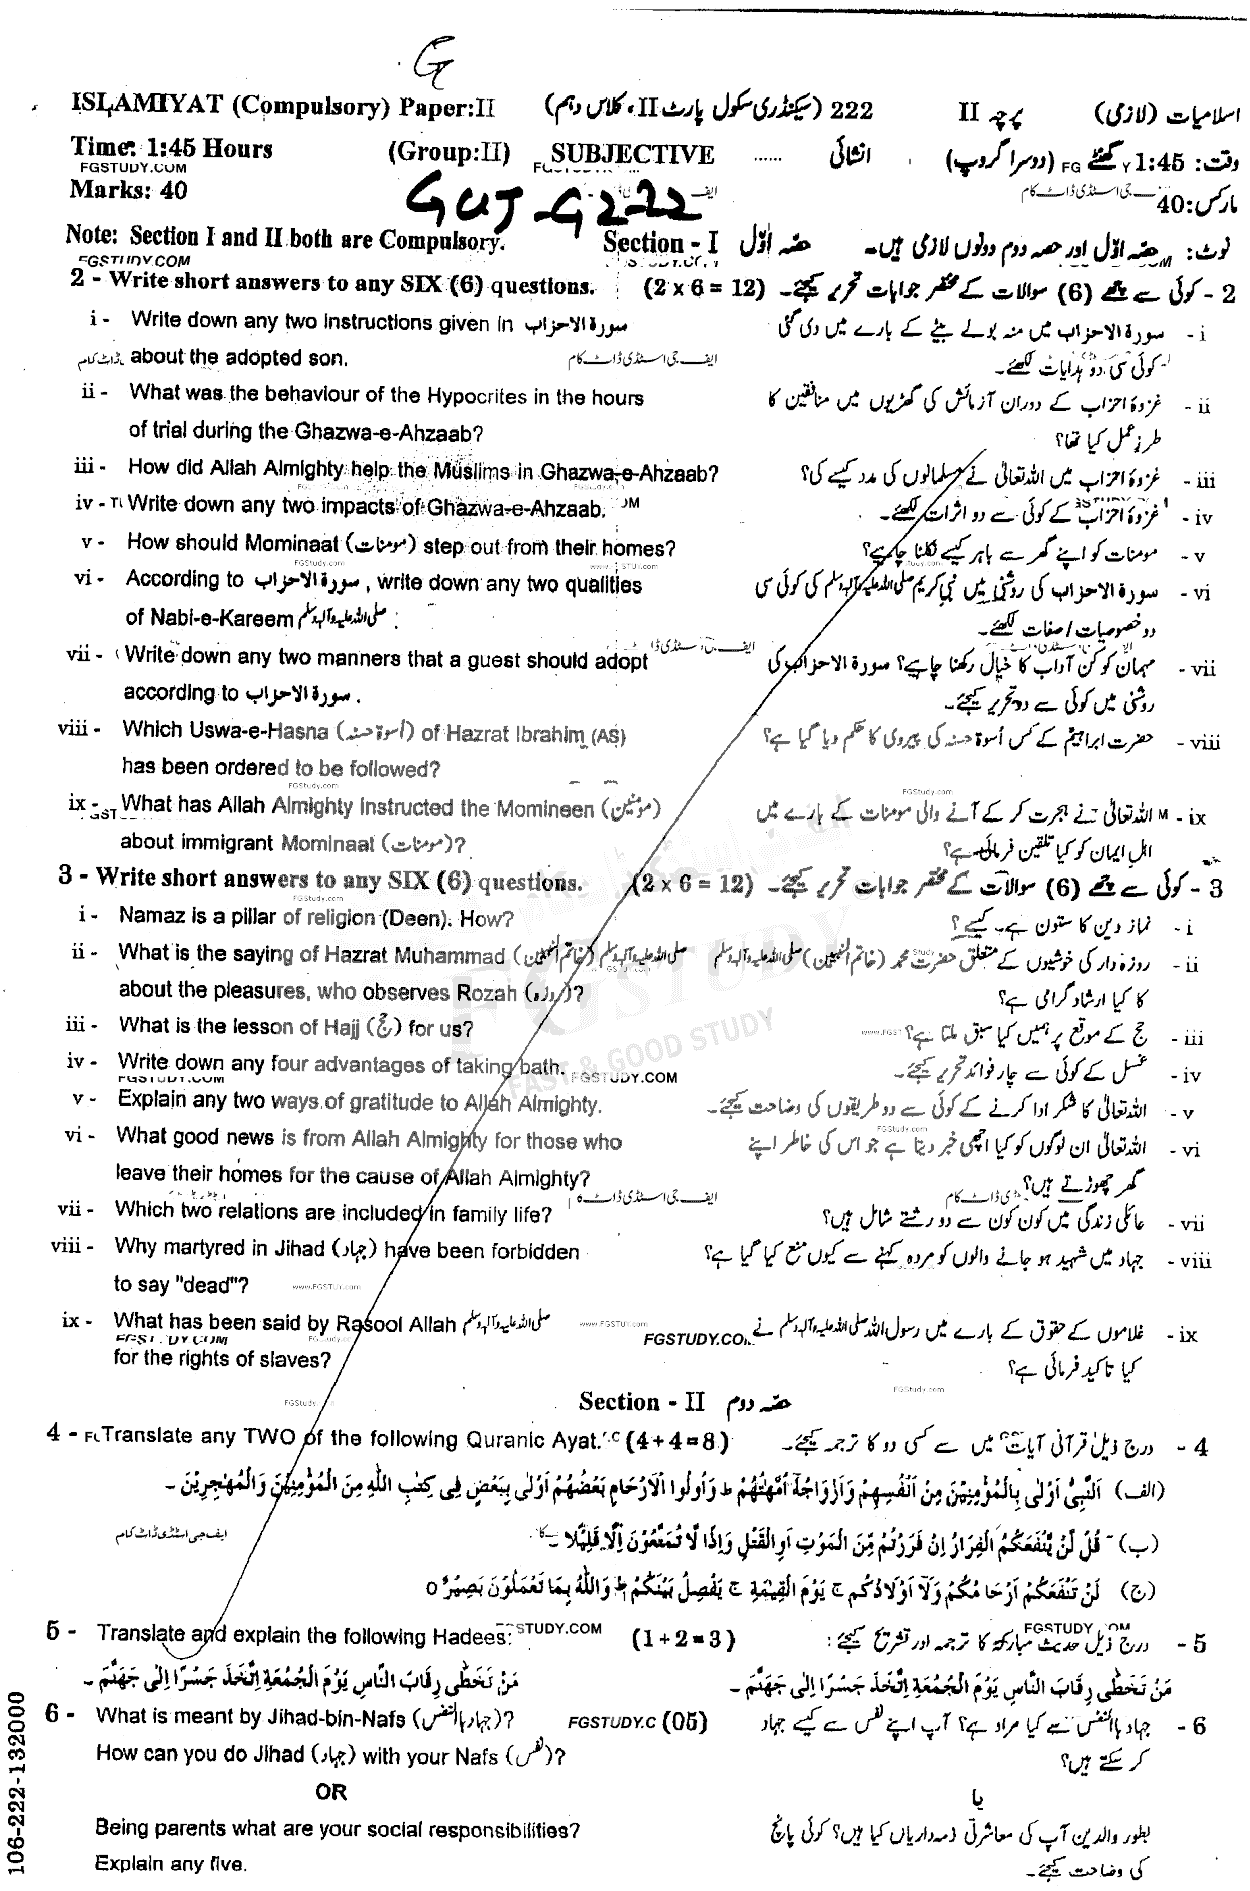 10th Class Islamiyat Past Paper 2022 Gujranwala Board Group 2 Subjective